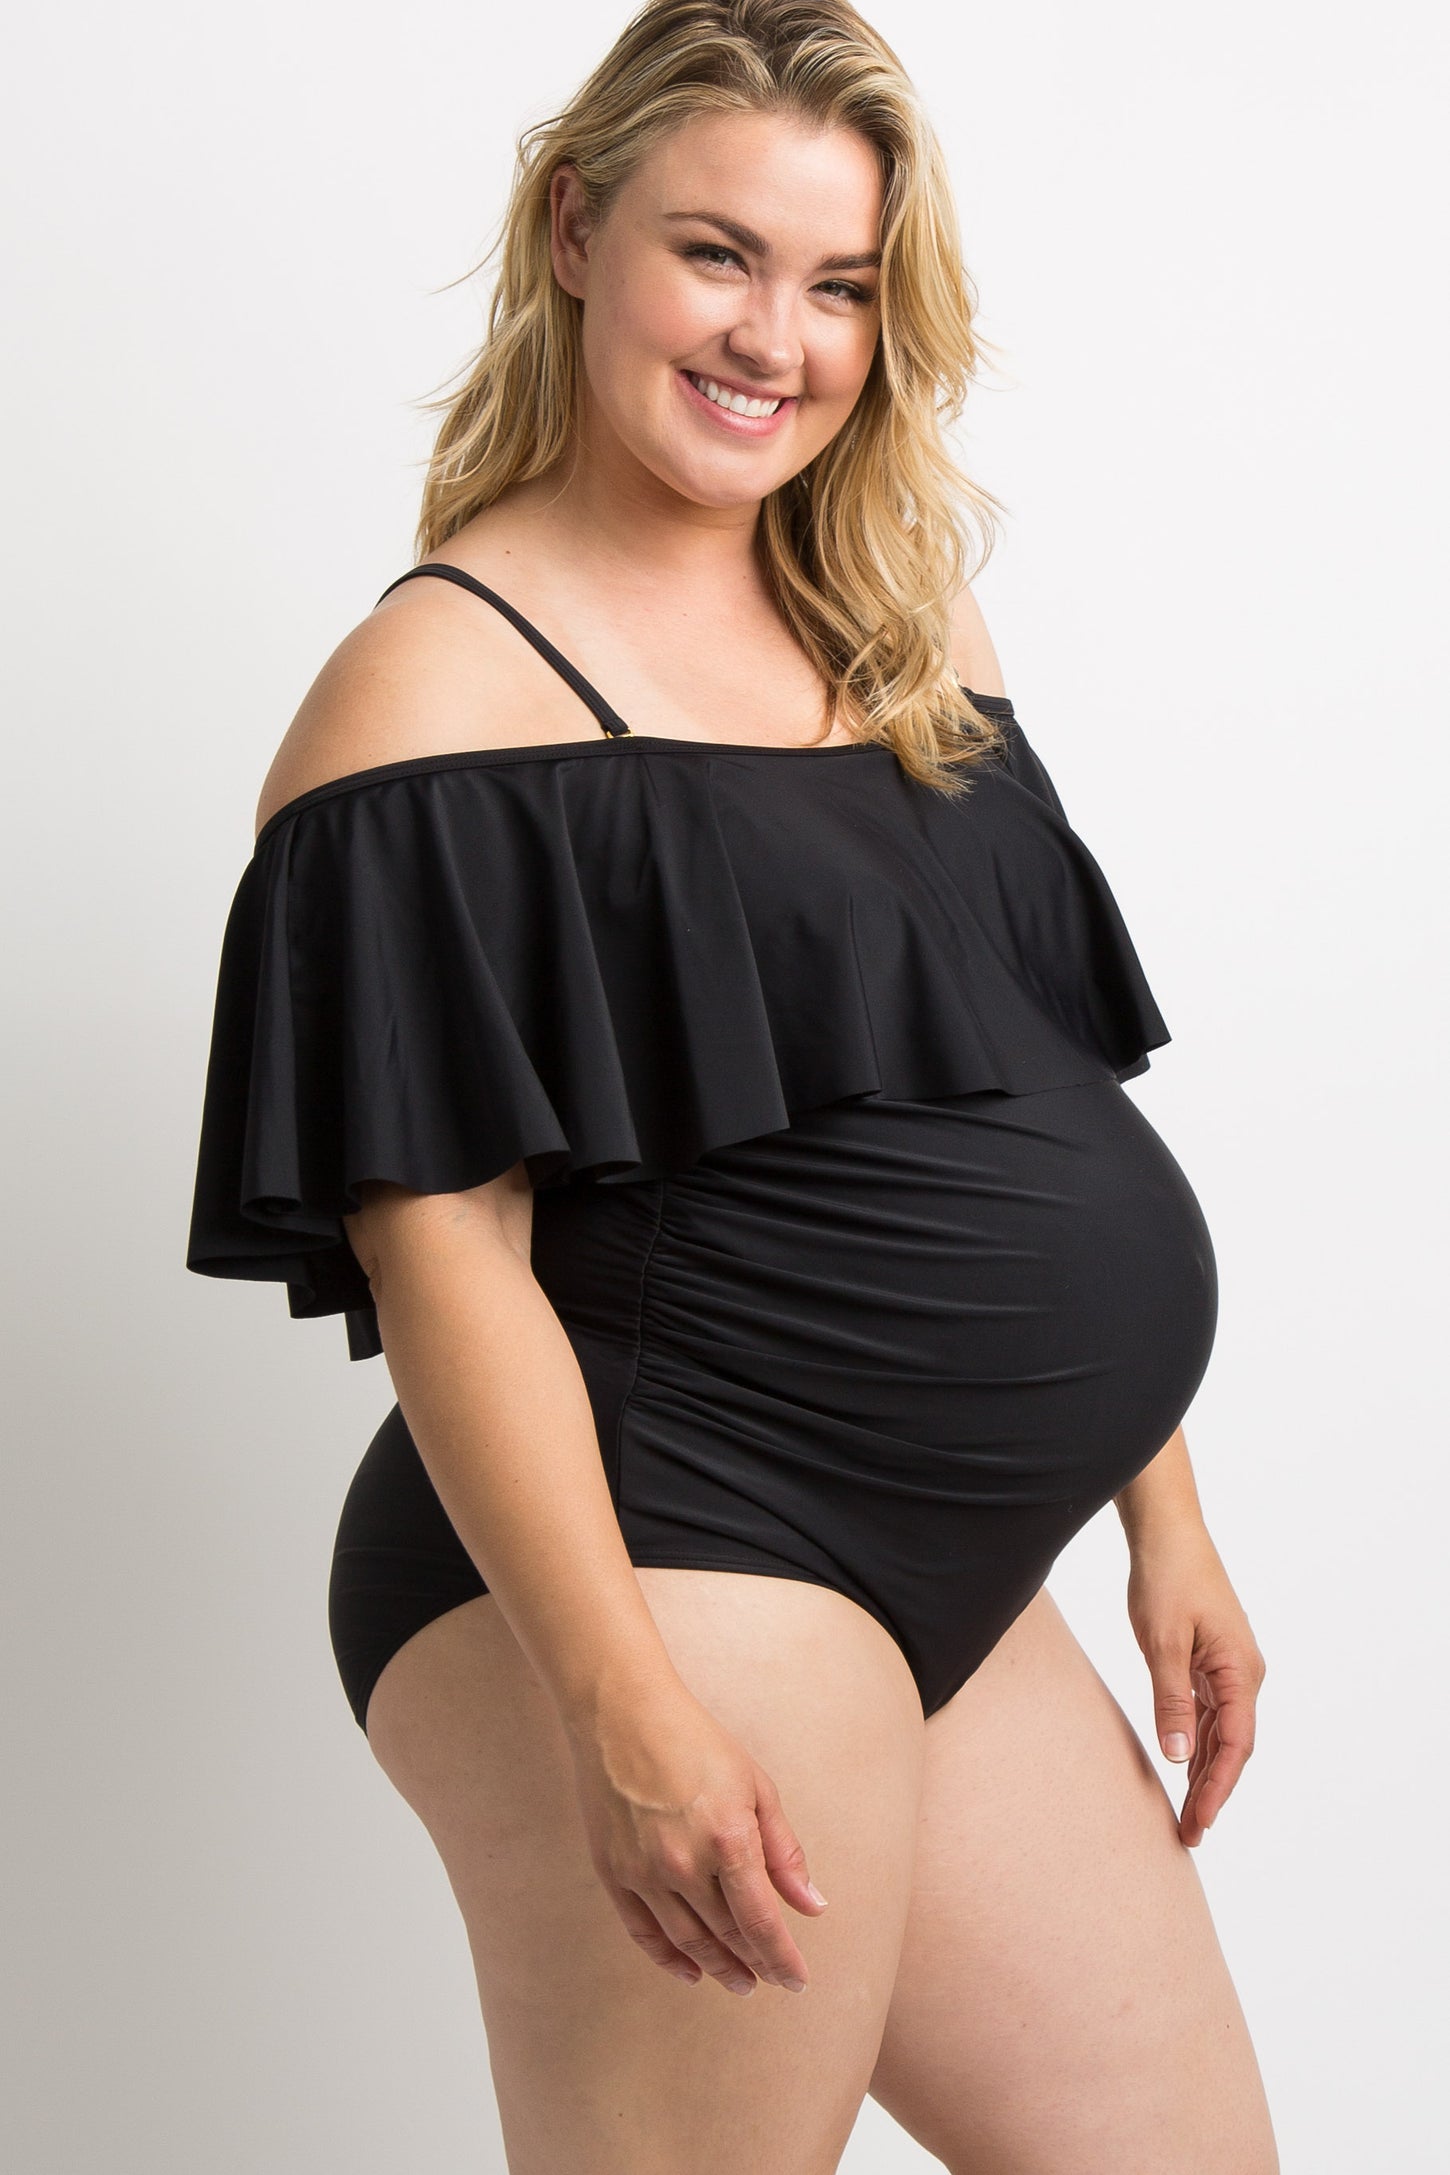 Plus Size Maternity Swimsuit Options Size 1X – 6X